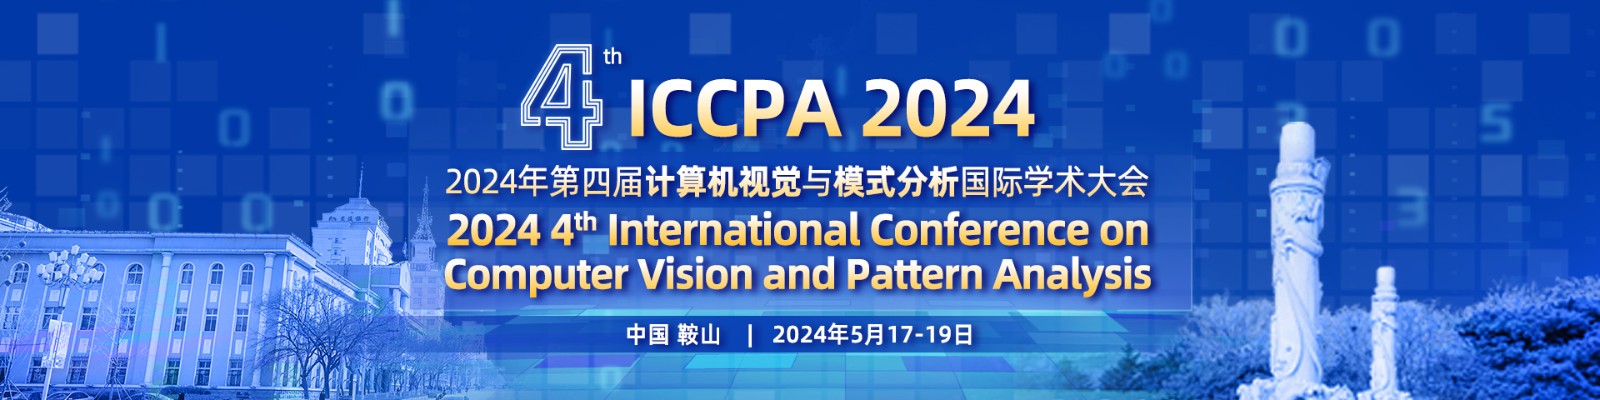 ICCPA-2024-中文-1920x480.jpg